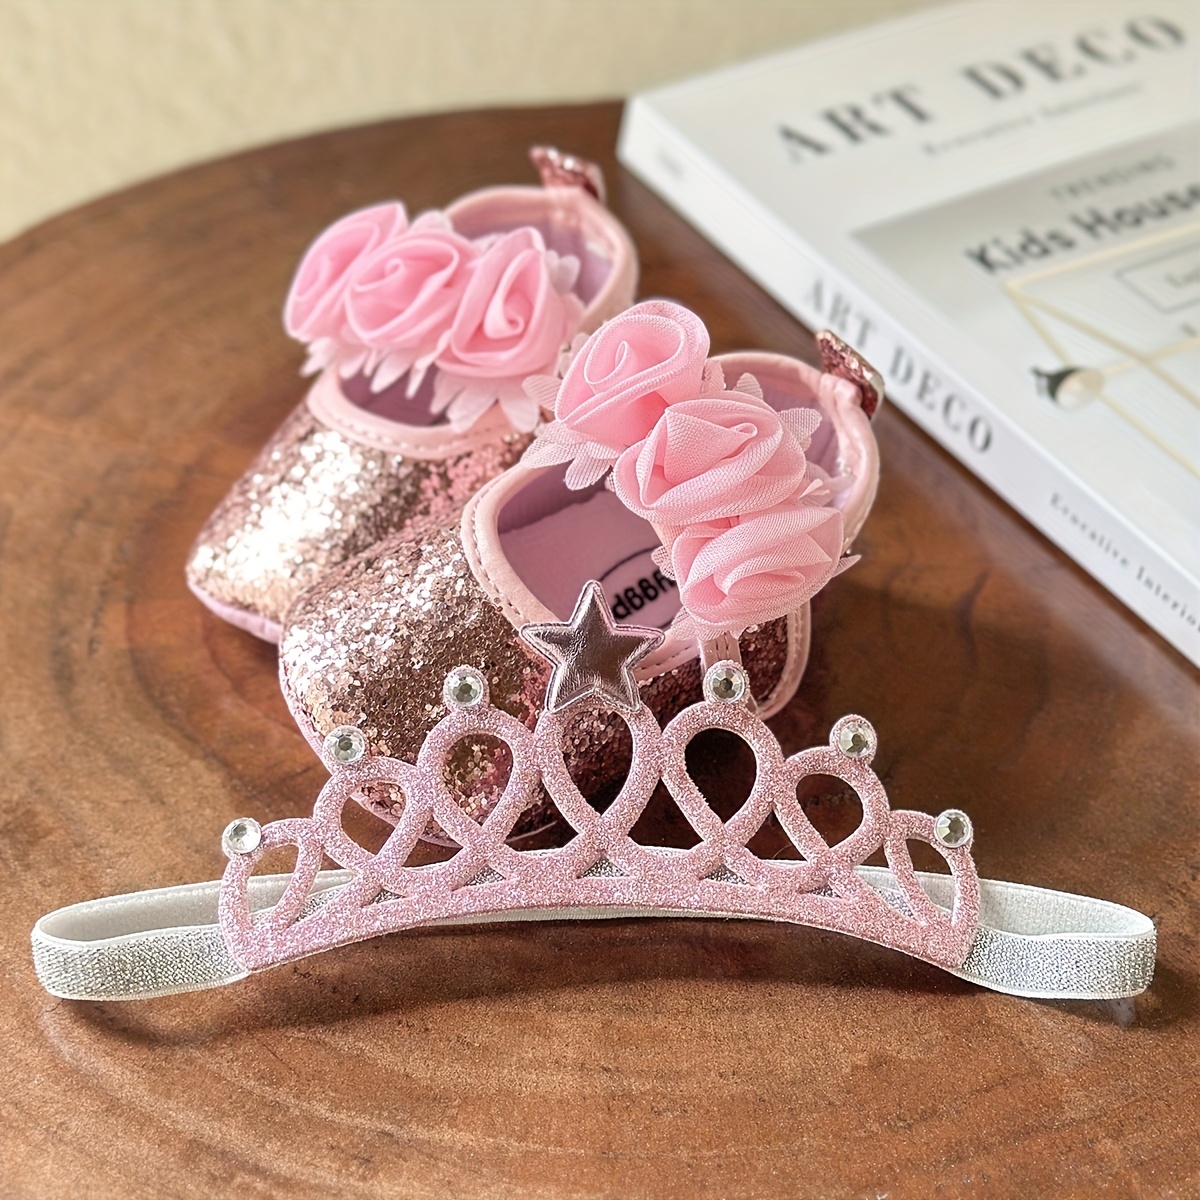 Pink Princess Soft Crown